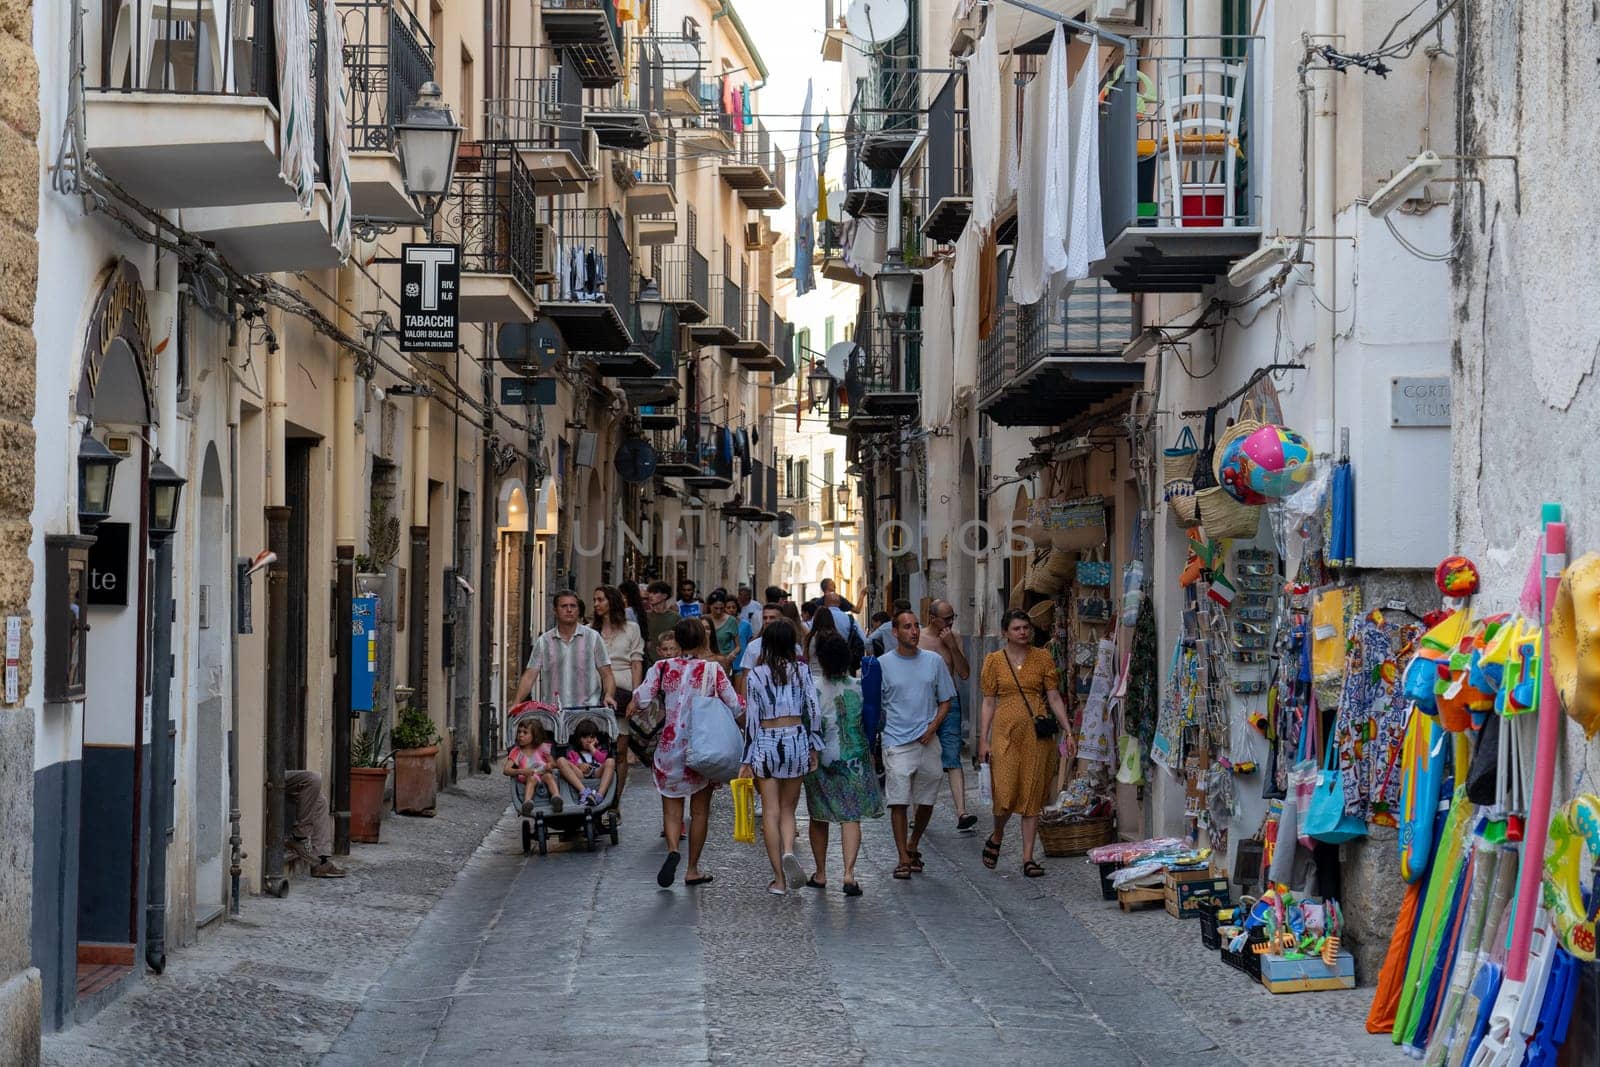 Historic City Center of Cefalu, Sicily by oliverfoerstner